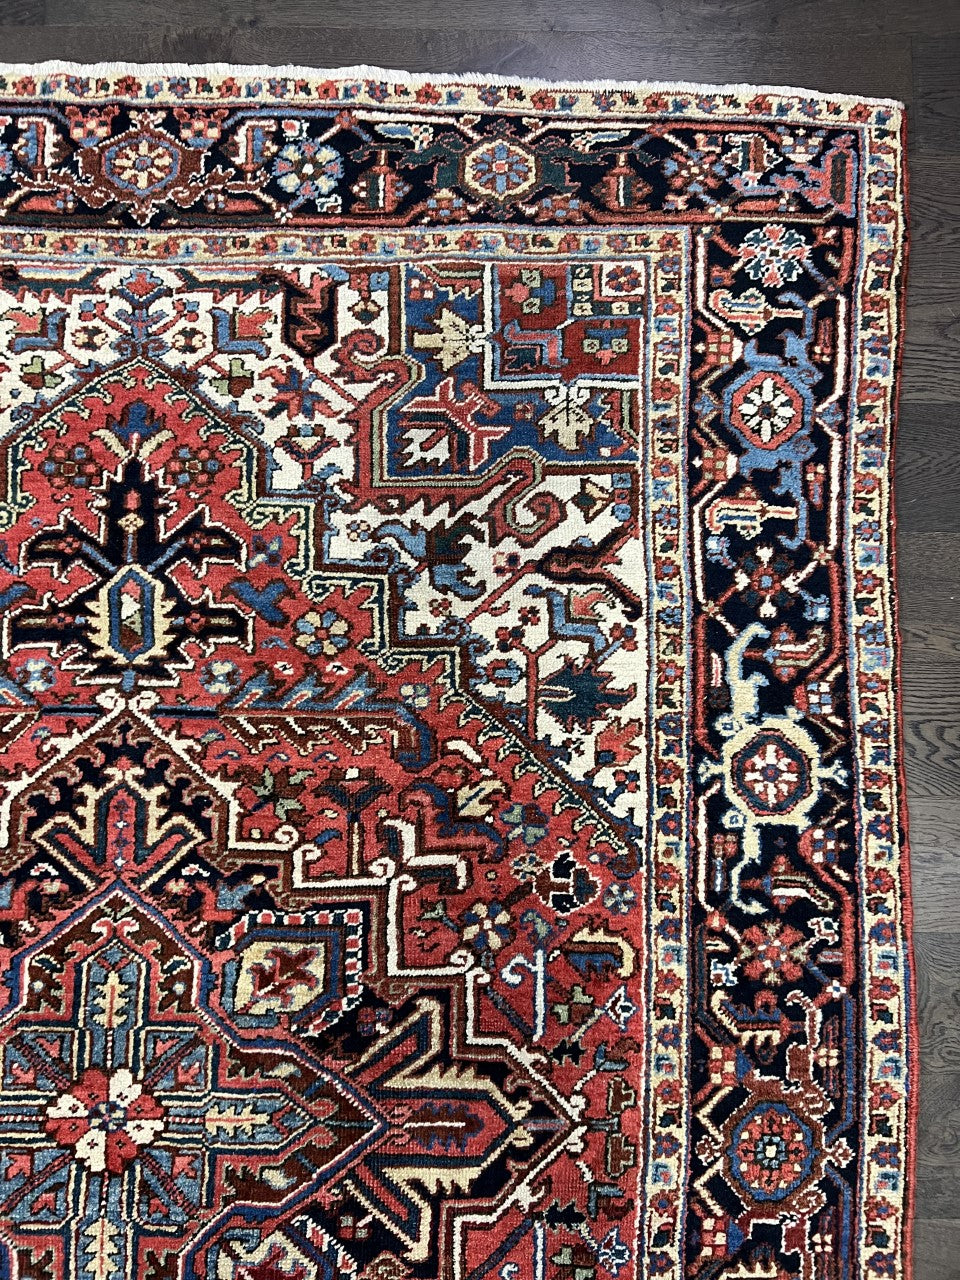 Amazing old antique handmade decorative Heriz rug